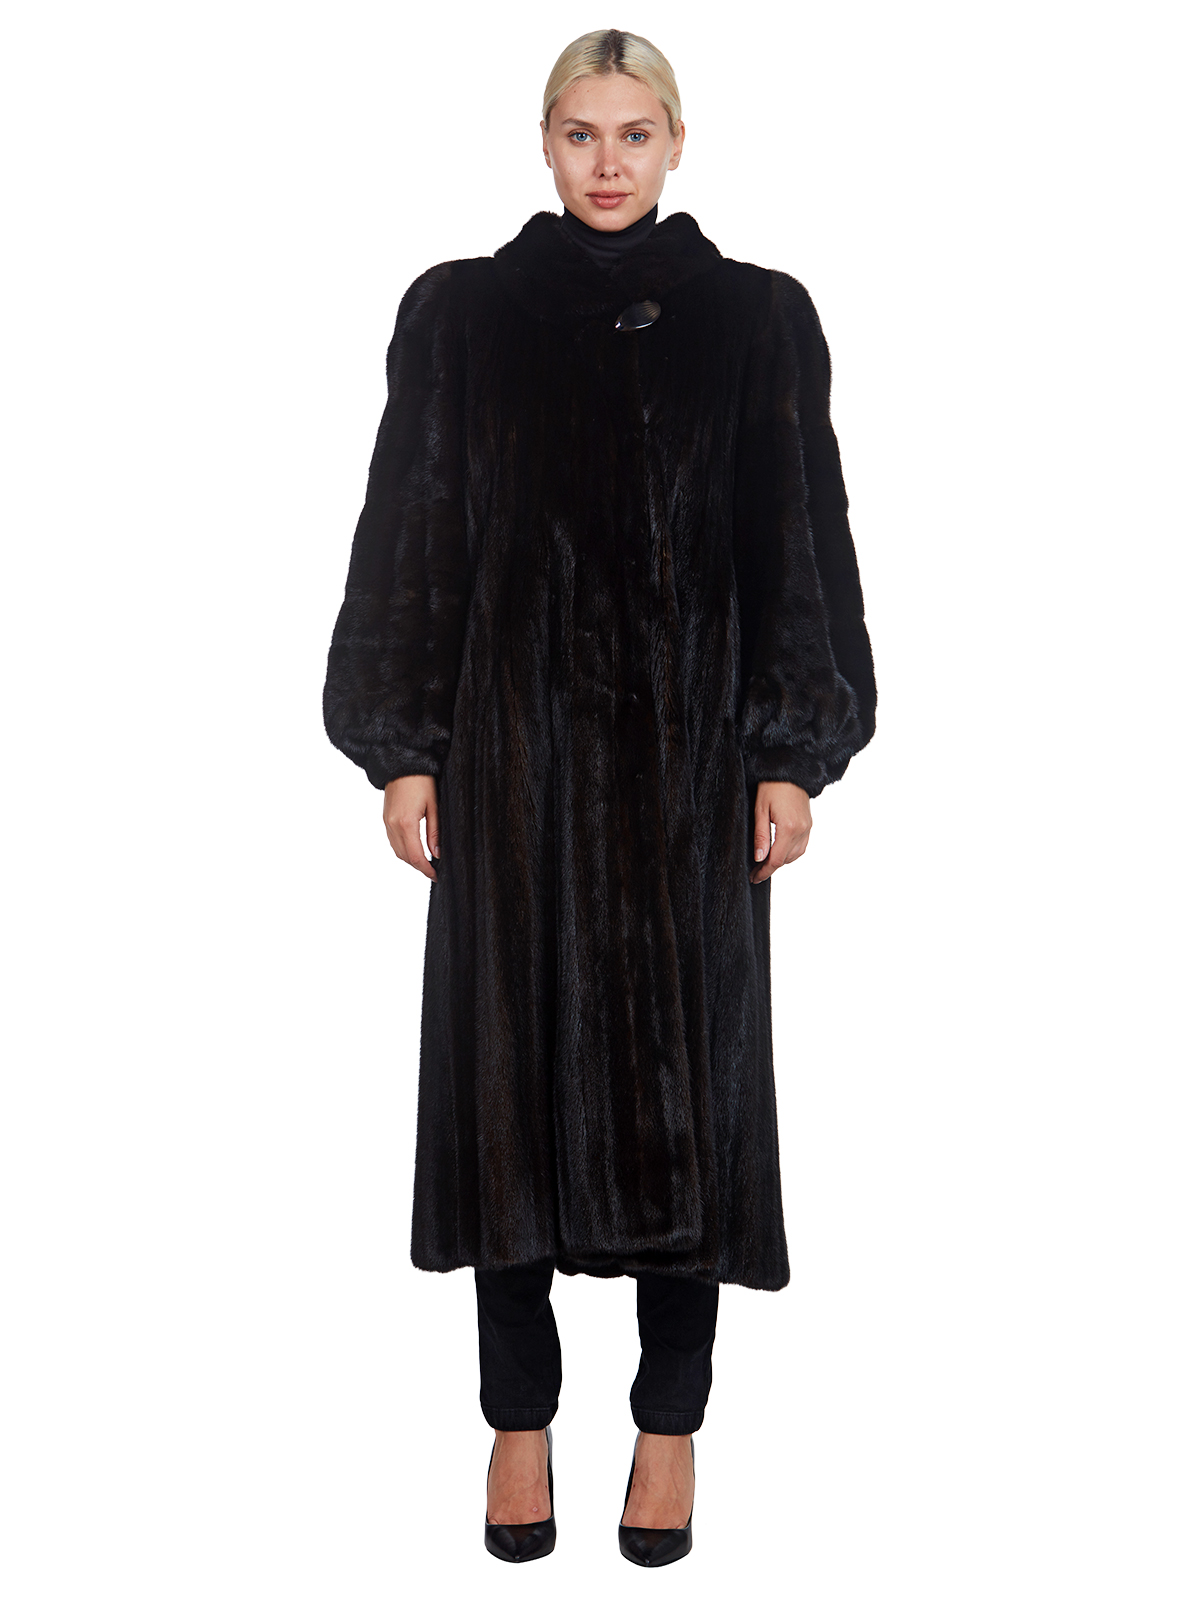 Full Length Ranch Mink Fur Coat - Women's Fur Coat - Large - Estate Furs